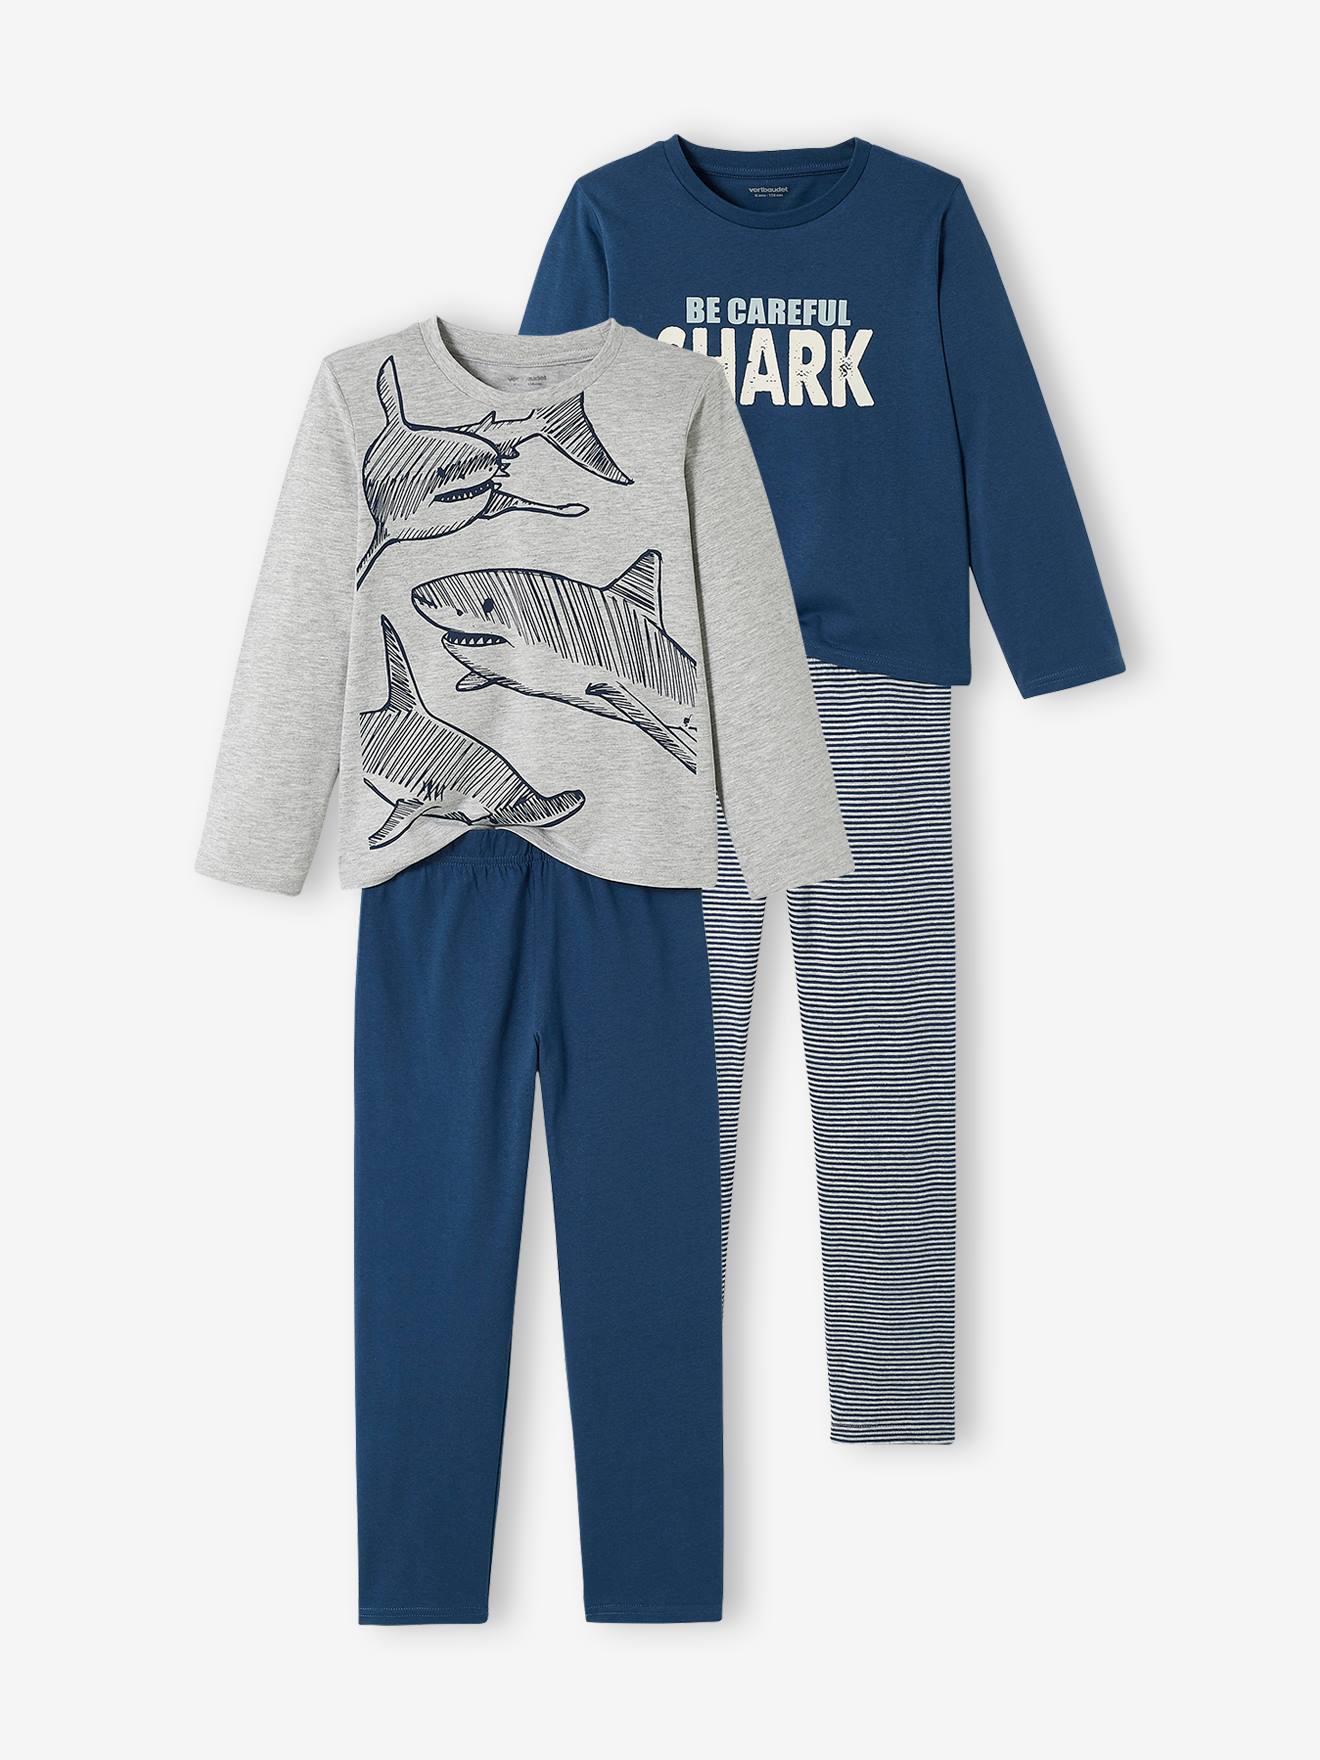 Lot de 2 pyjamas requins garçon lot bleu et gris